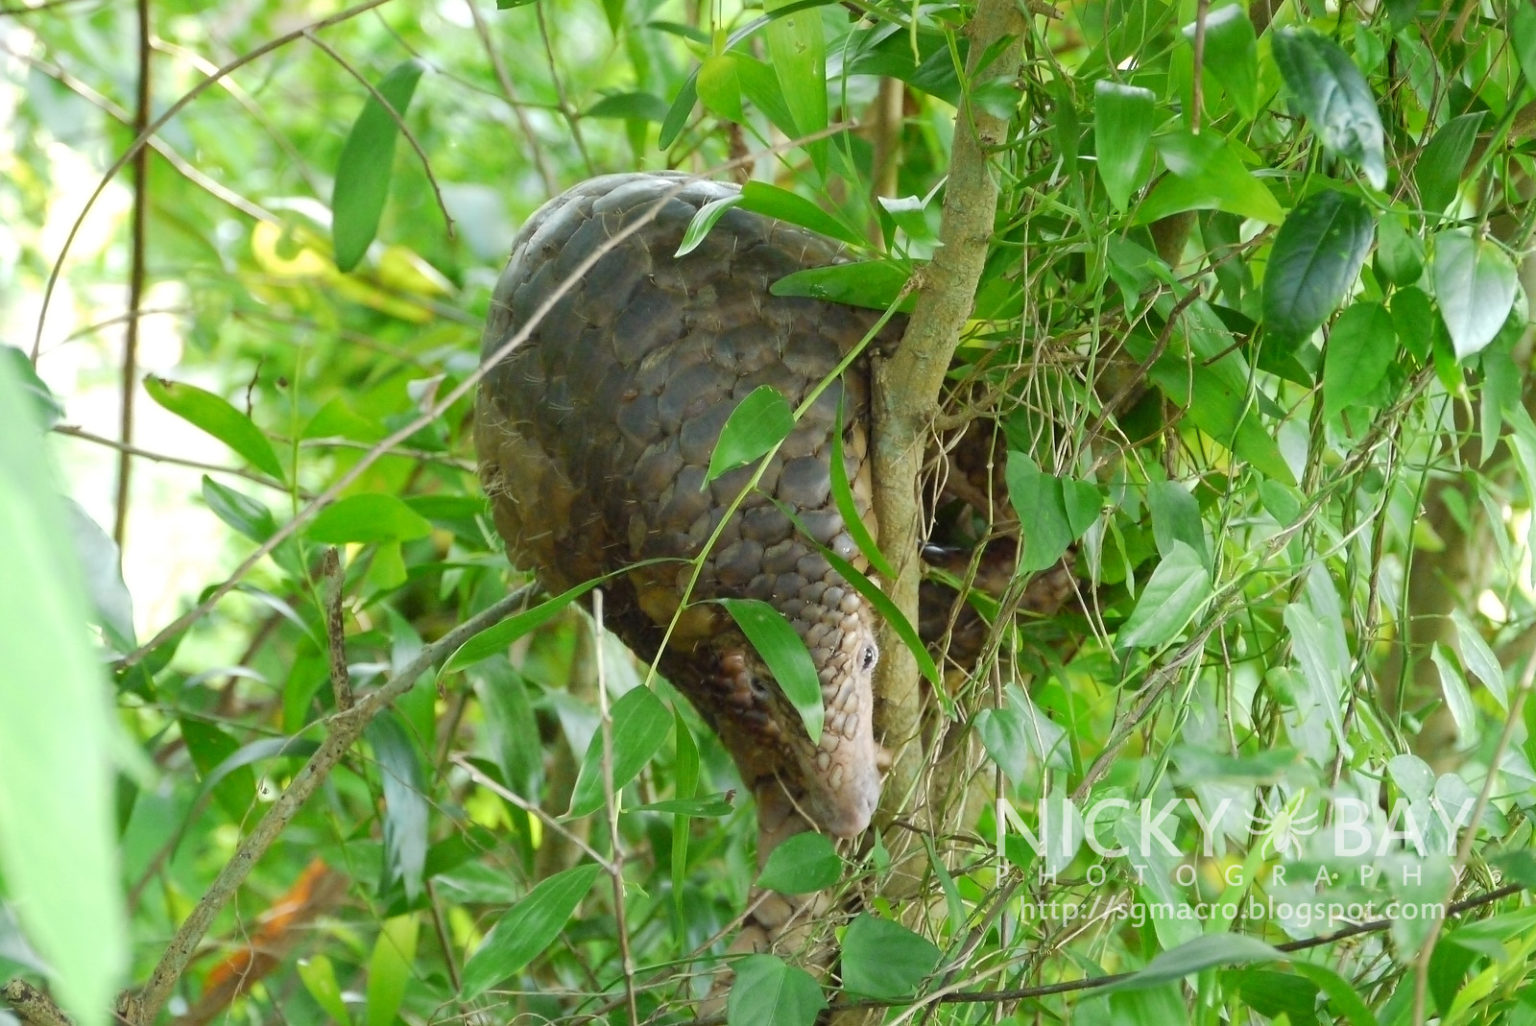 Sunda pangolin (Manis javanica)